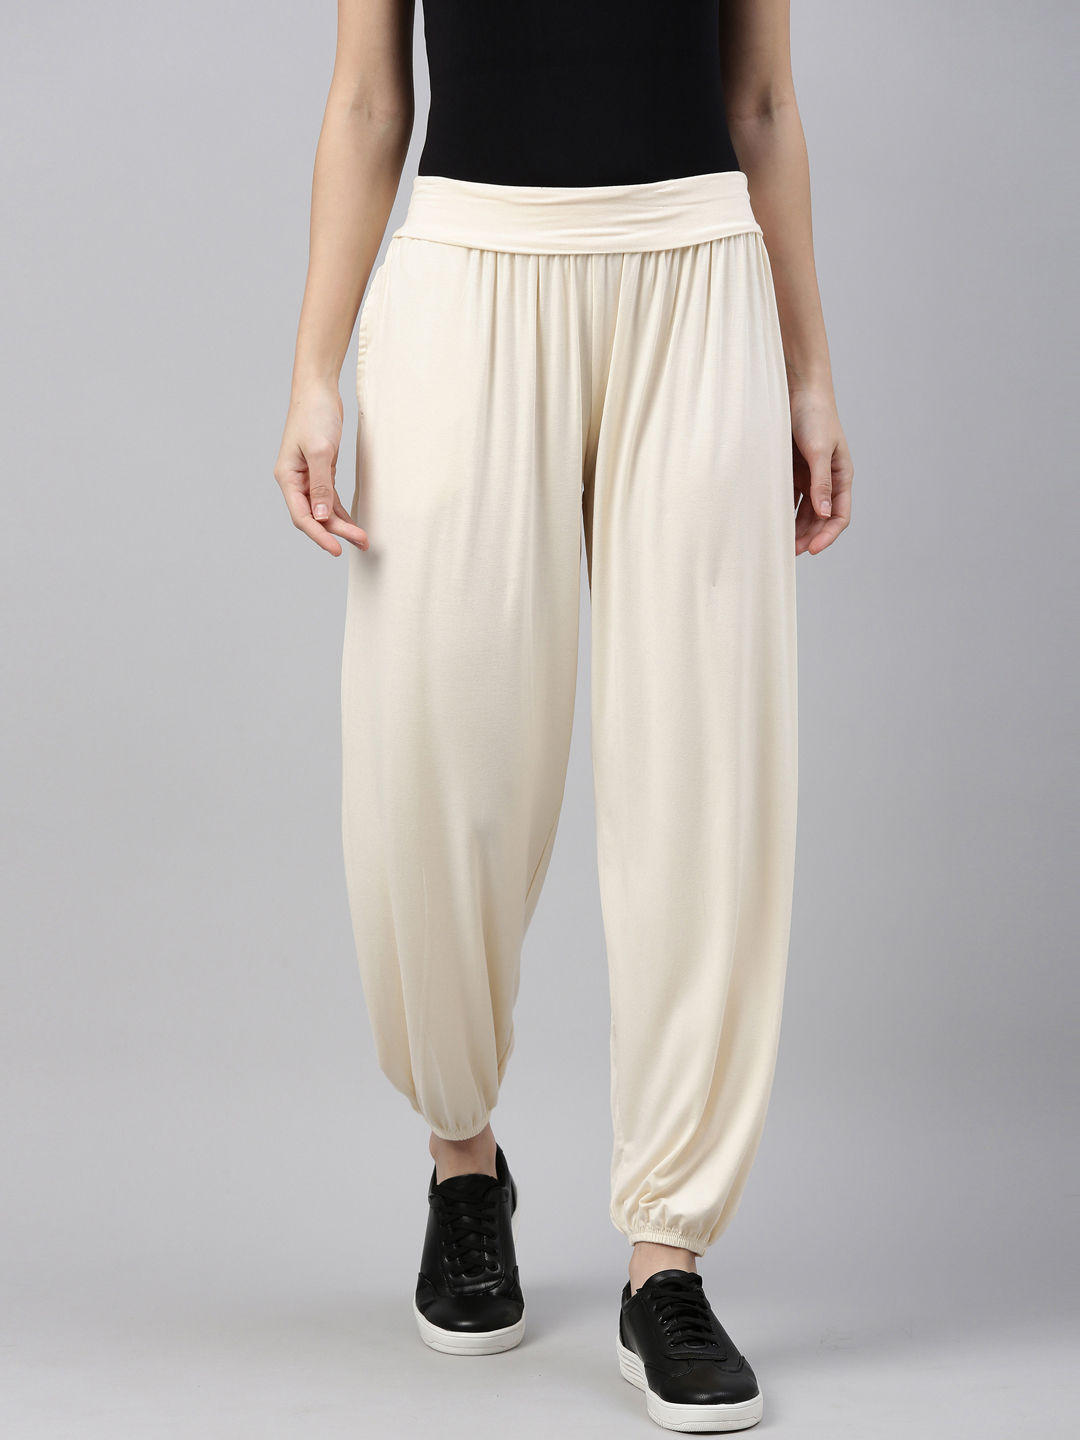 Woman's Cotton Harem Pants Free Size at Rs 220/piece | Harem Pants in  Jaipur | ID: 2852720284448